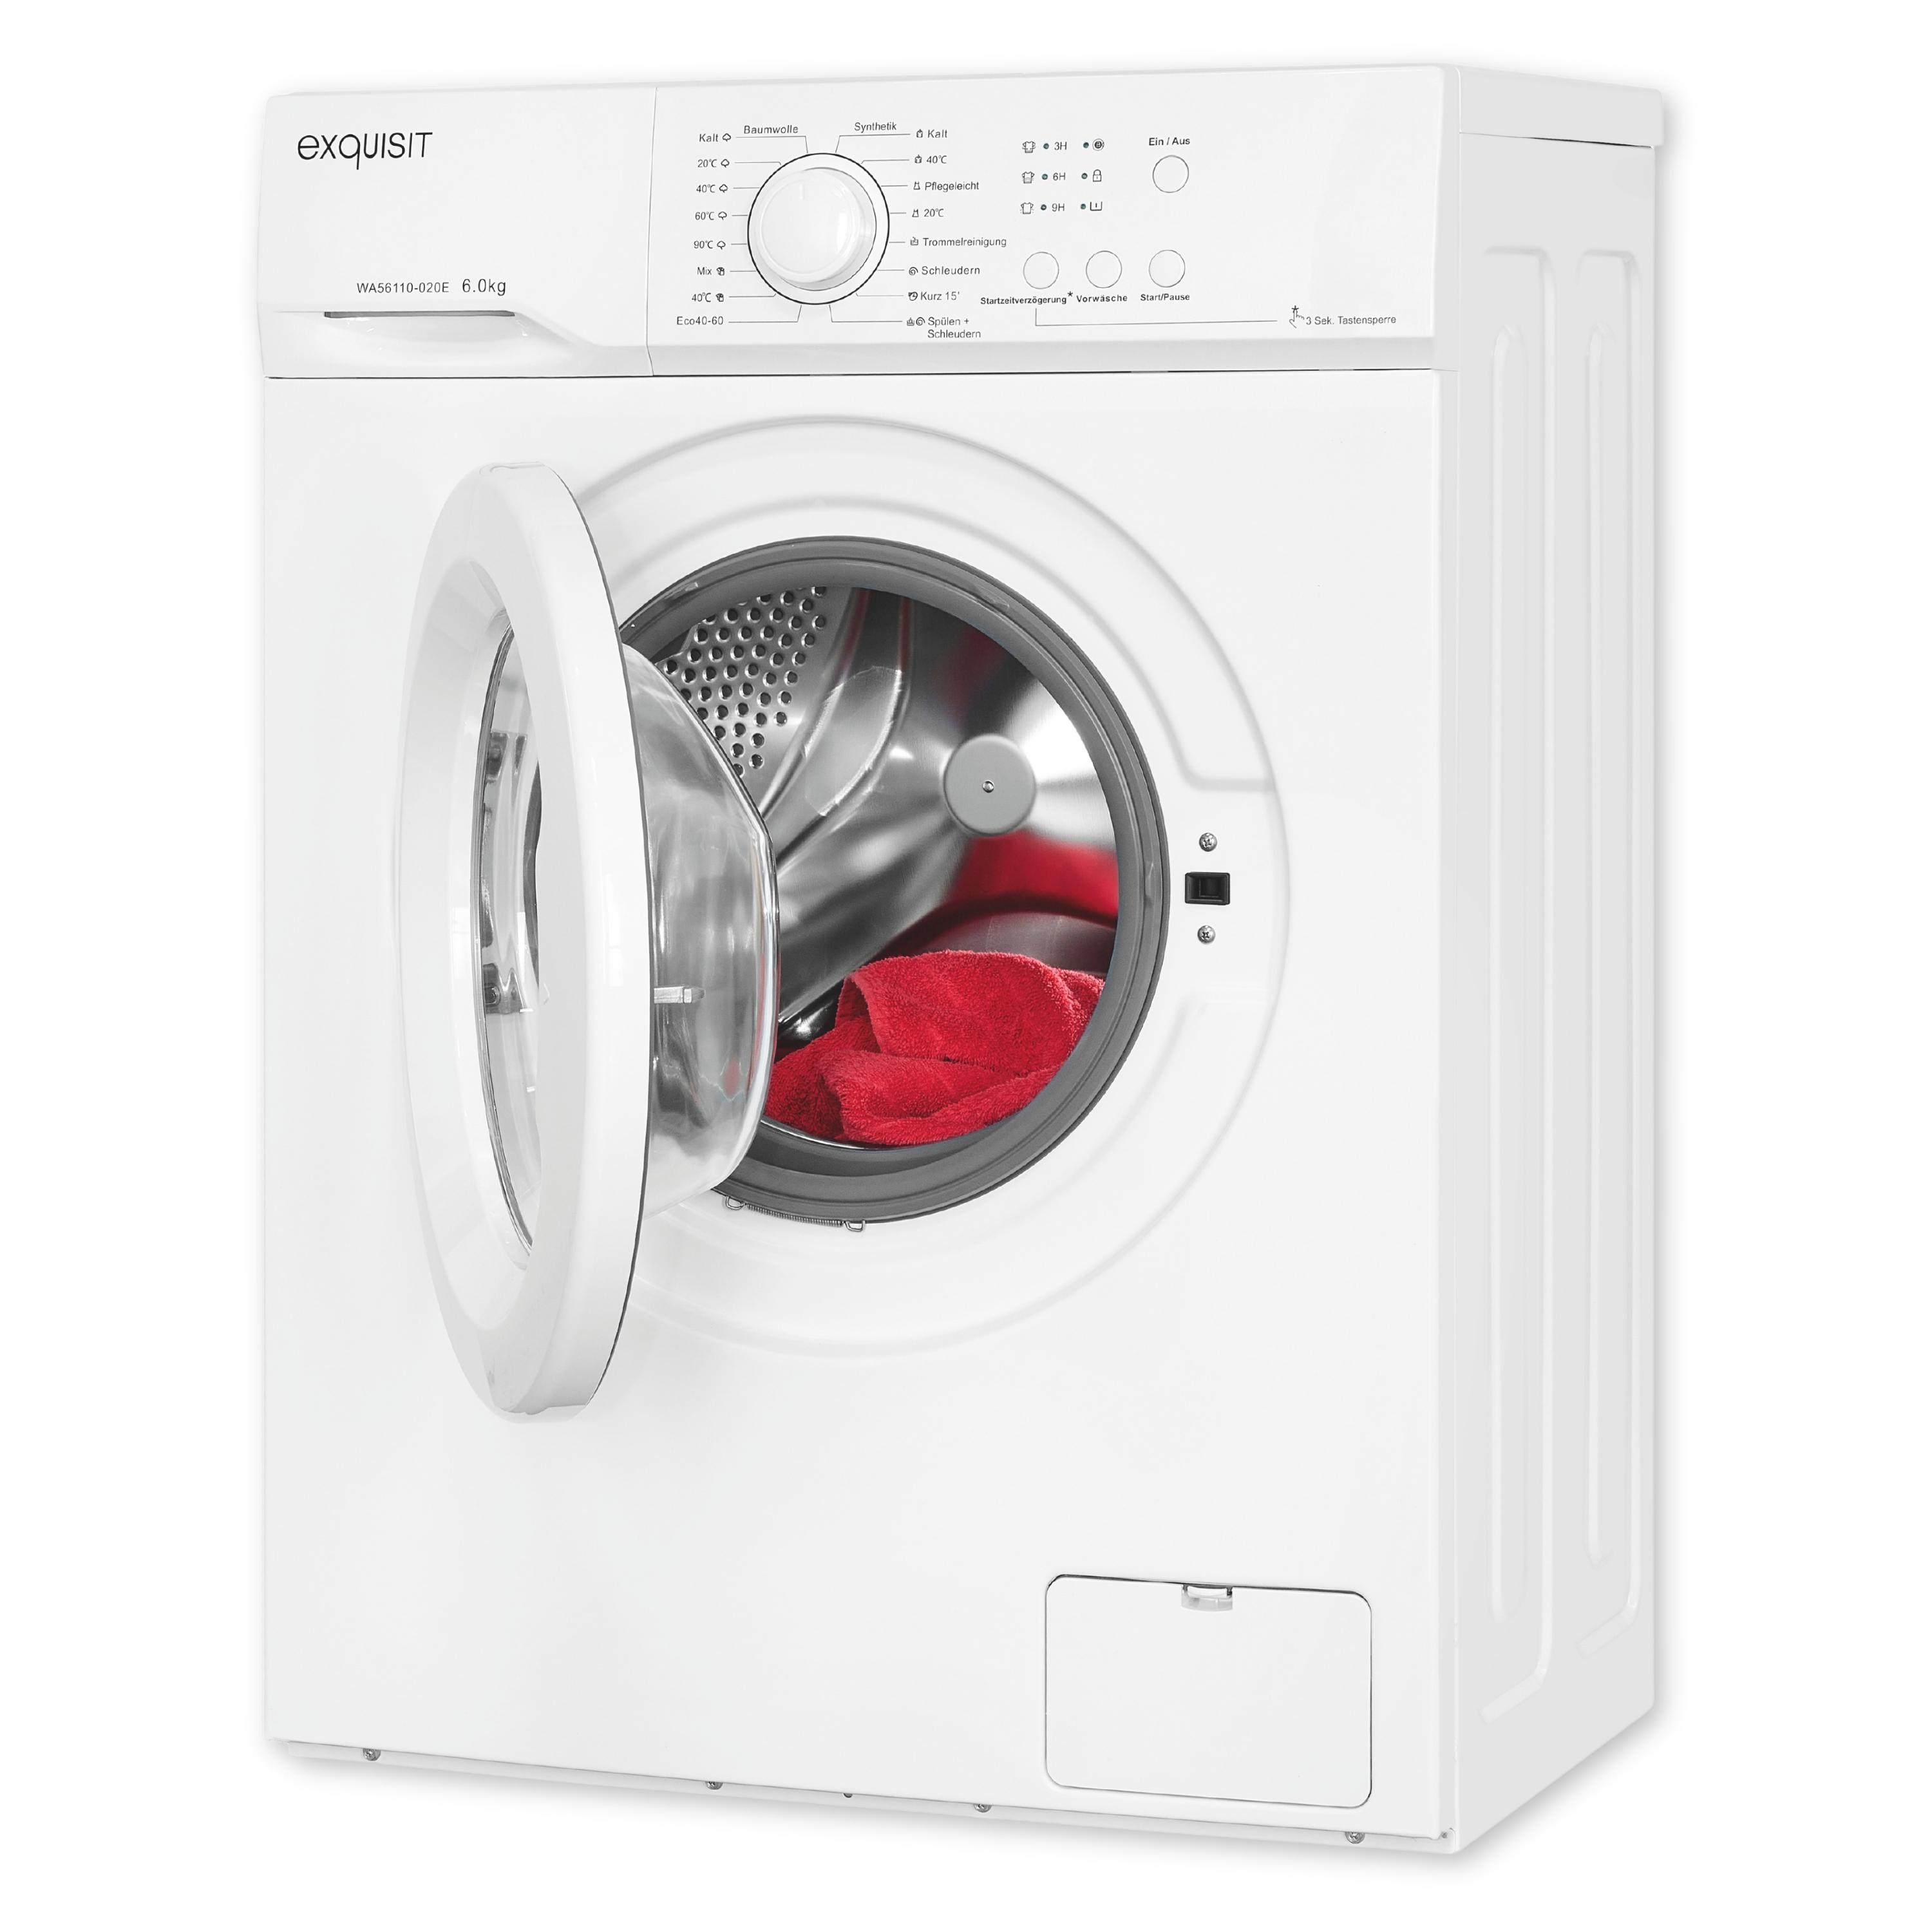 EXQUISIT WA56110-020E Waschmaschine (6,0 E) kg